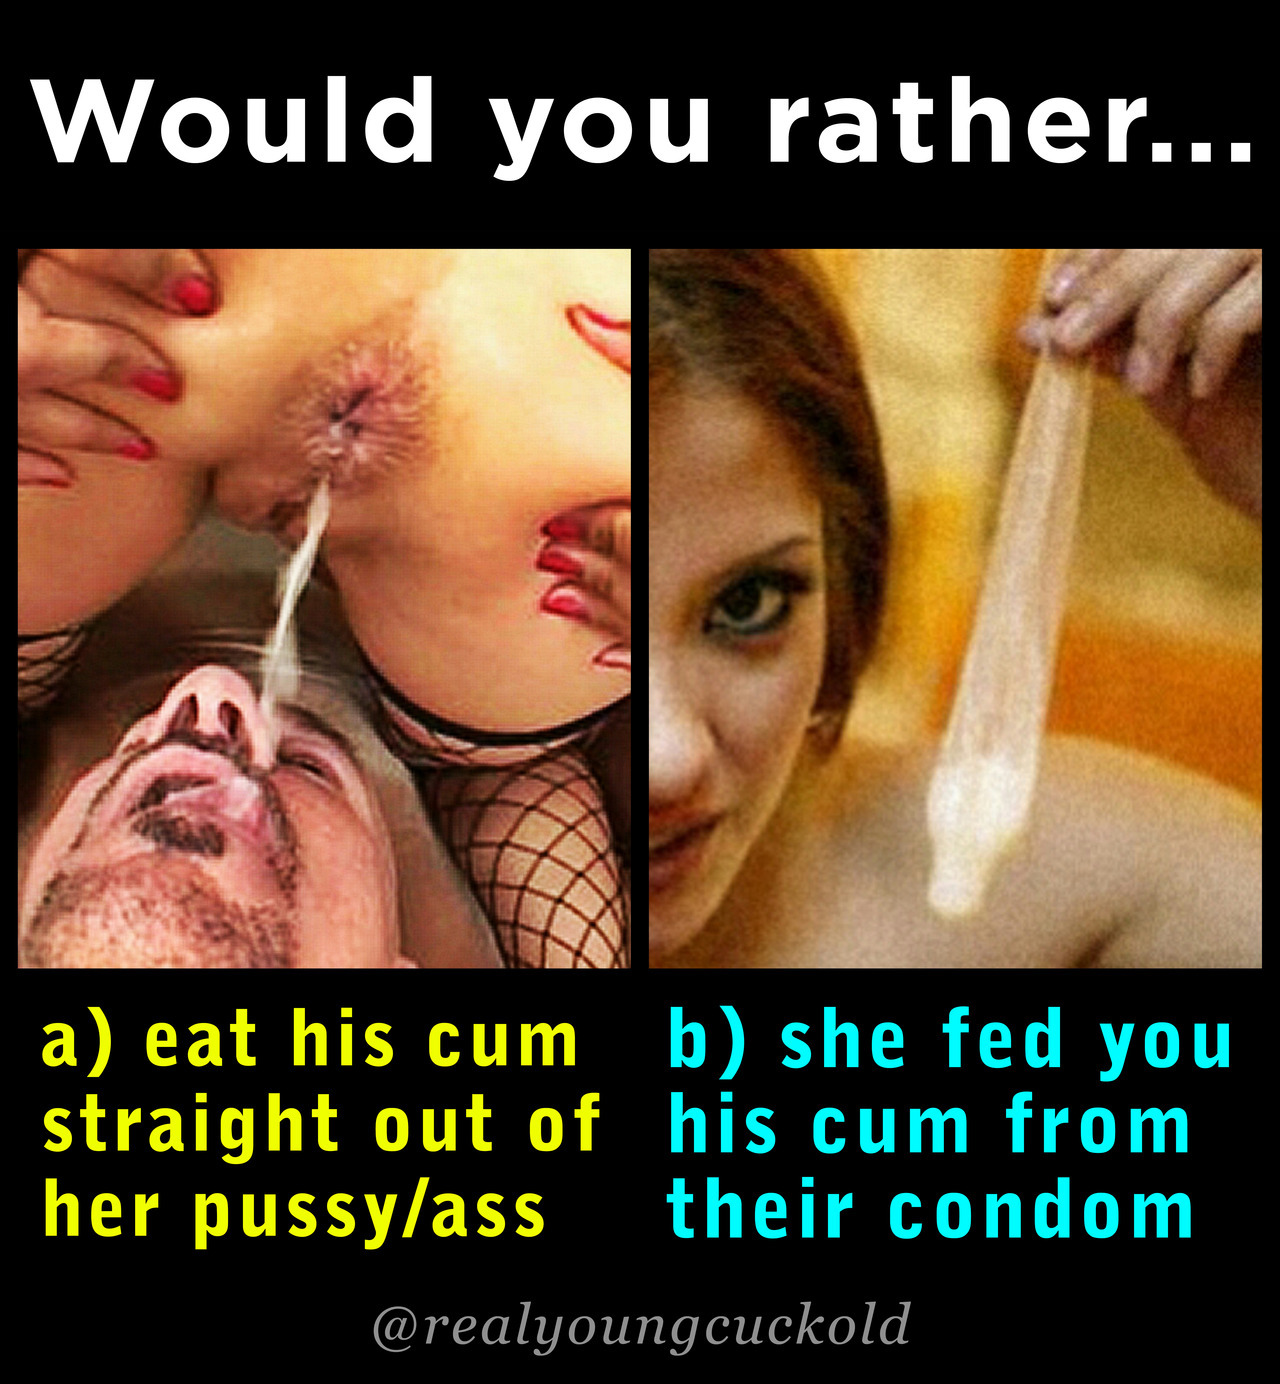 Eat her until she cums